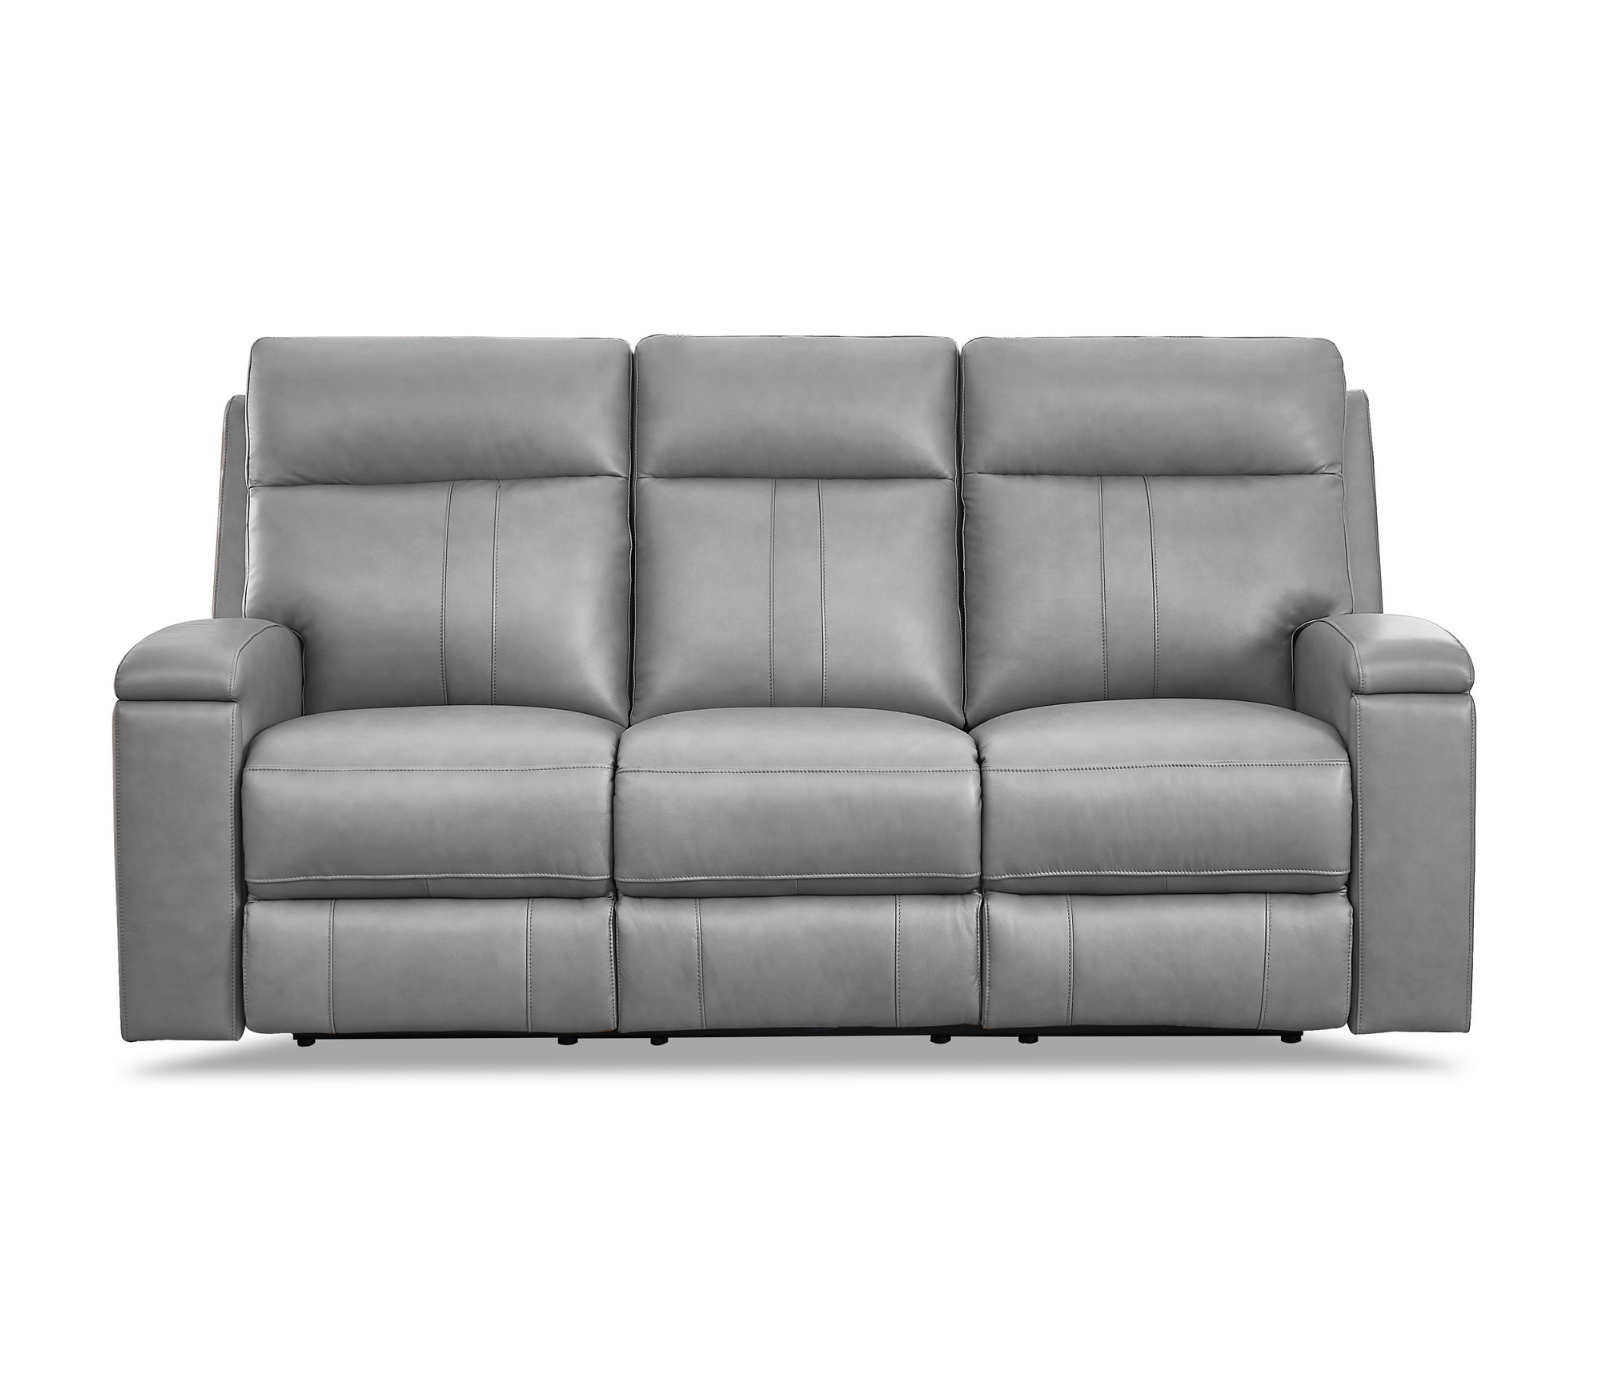 Denali Sofa - Power Reclining w/ Power Headrests - Silver Grey Leather